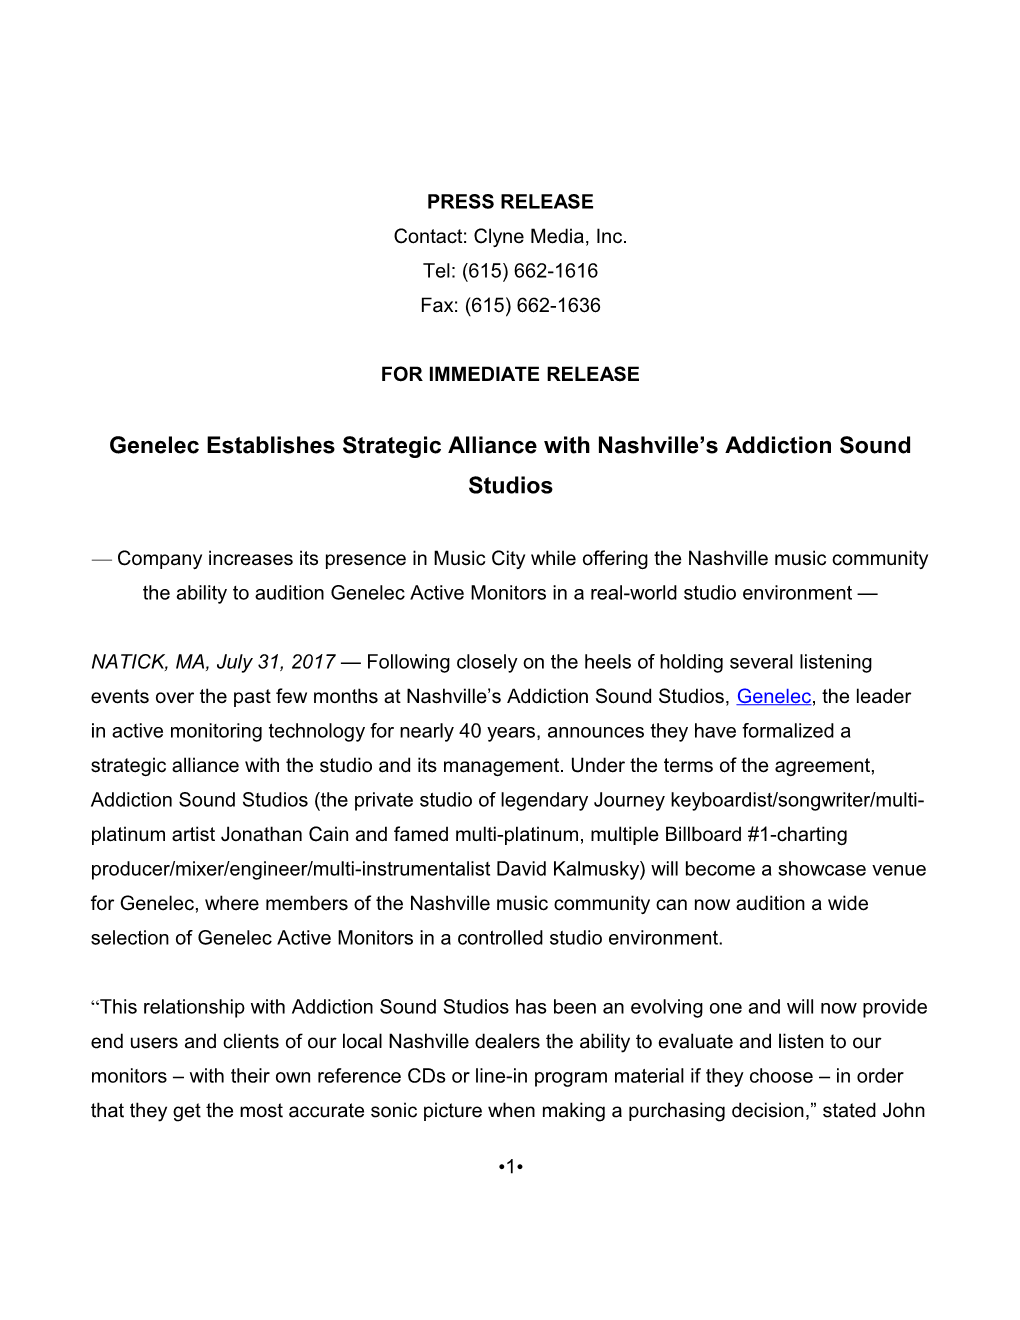 Genelec Establishes Strategic Alliance with Nashville S Addiction Sound Studios